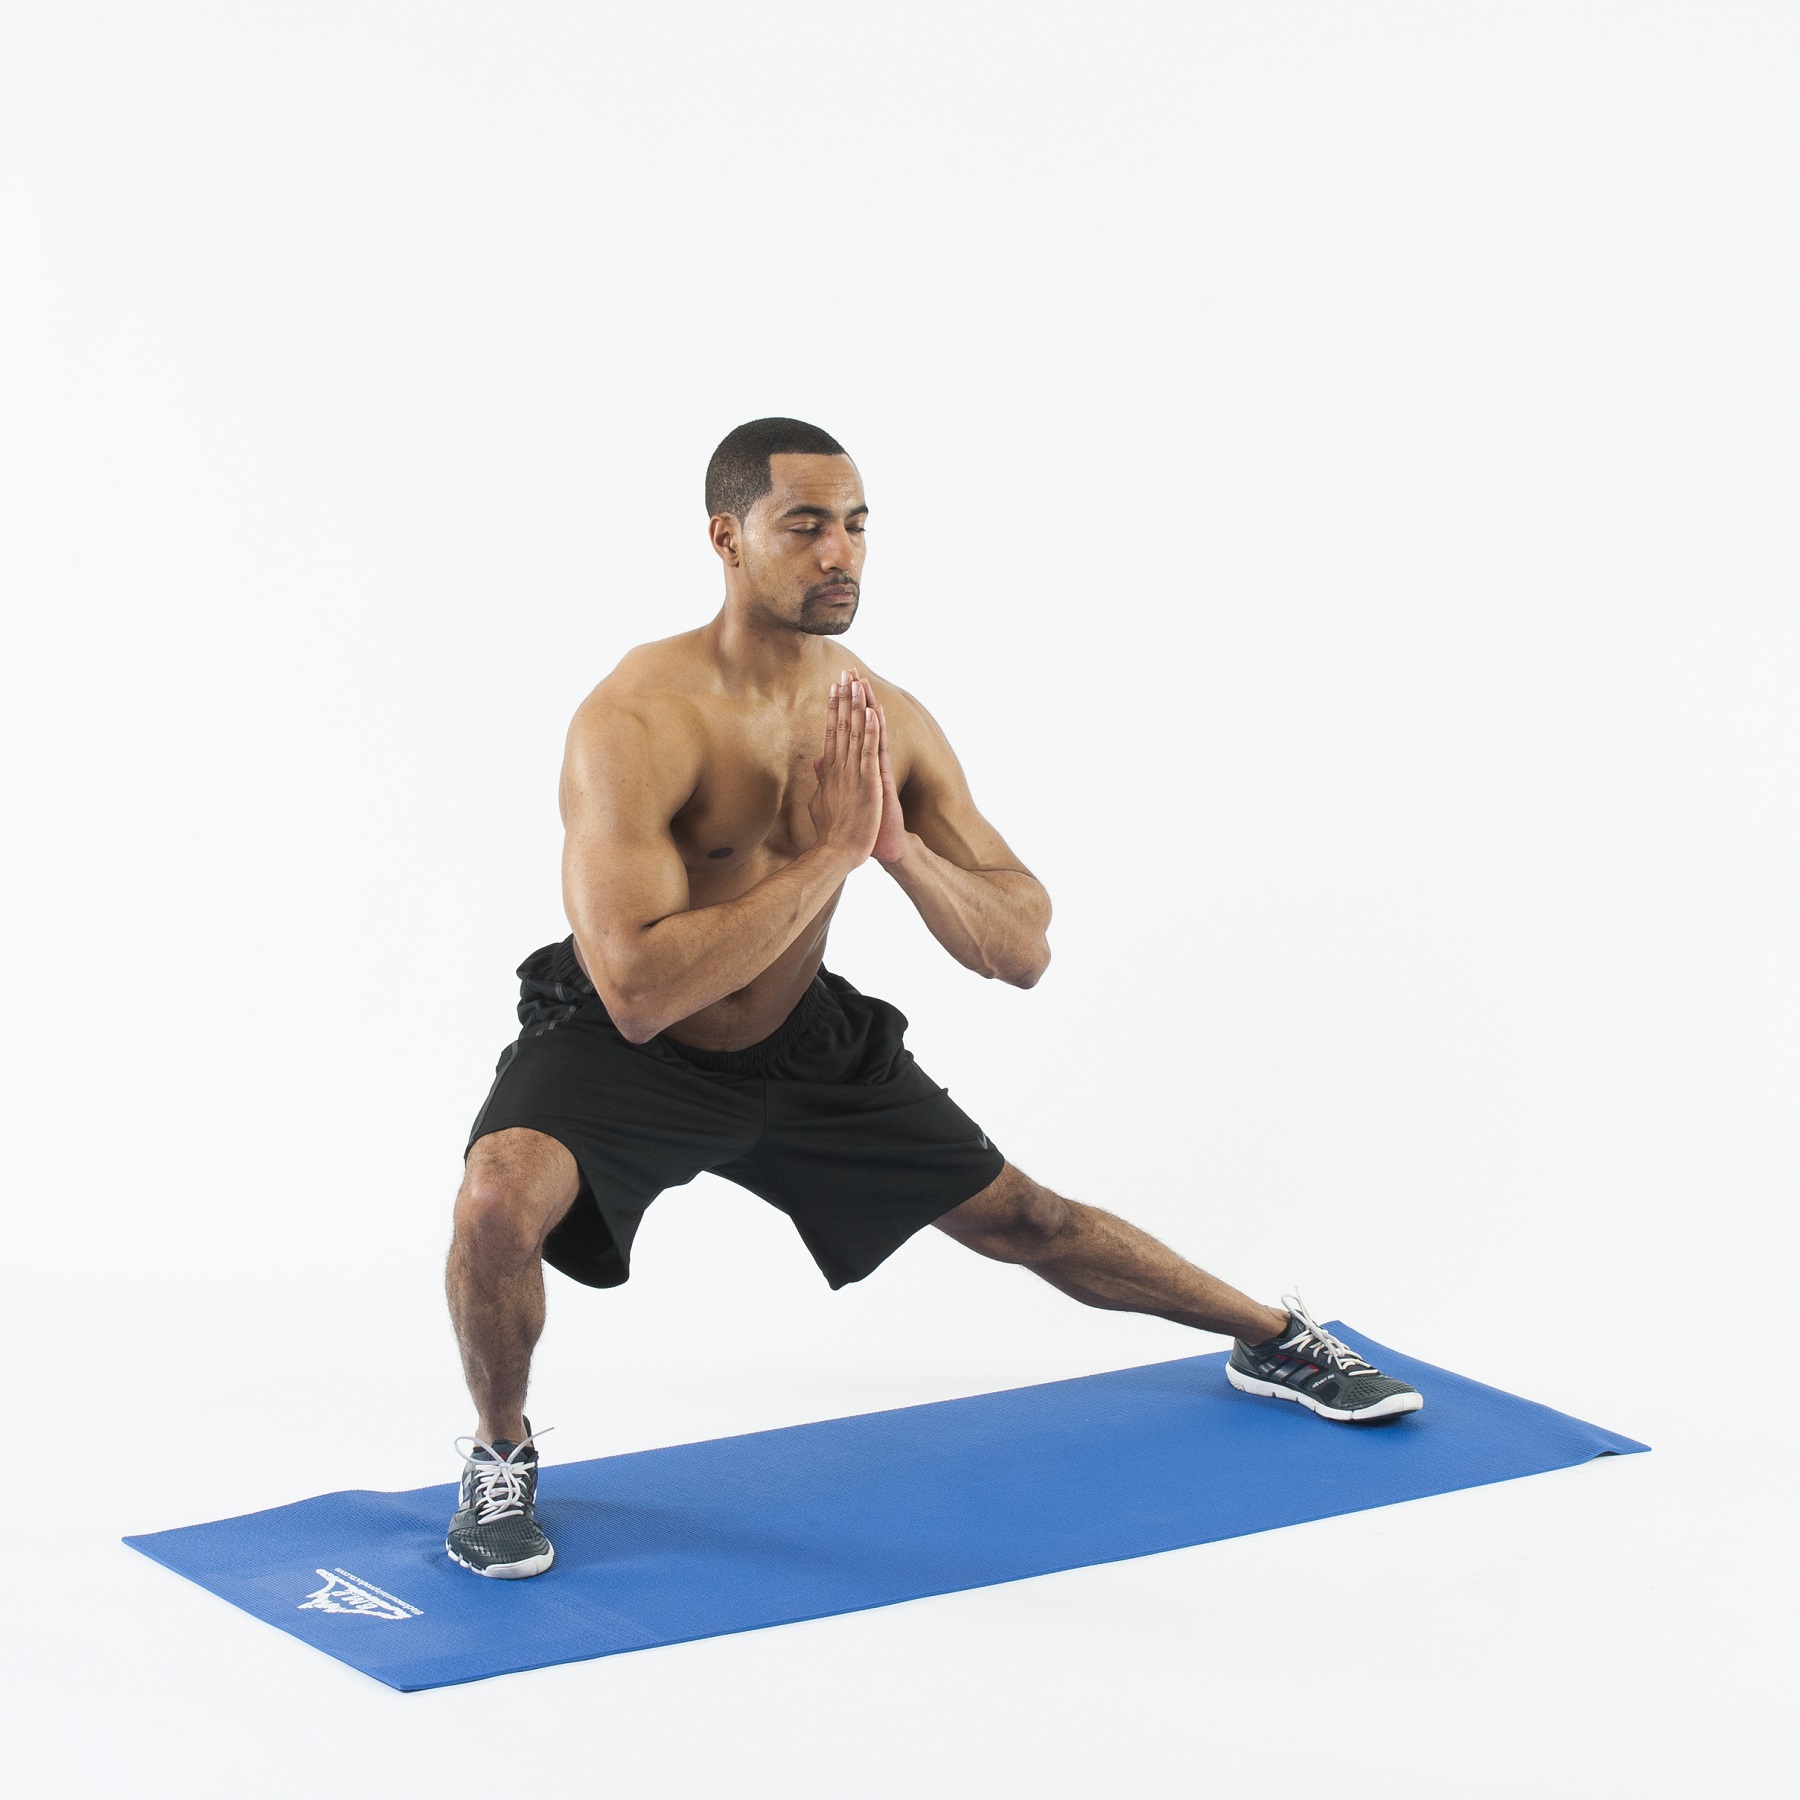 Yoga Starter Kit 15-Piece Yoga Equipment - Yoga Set